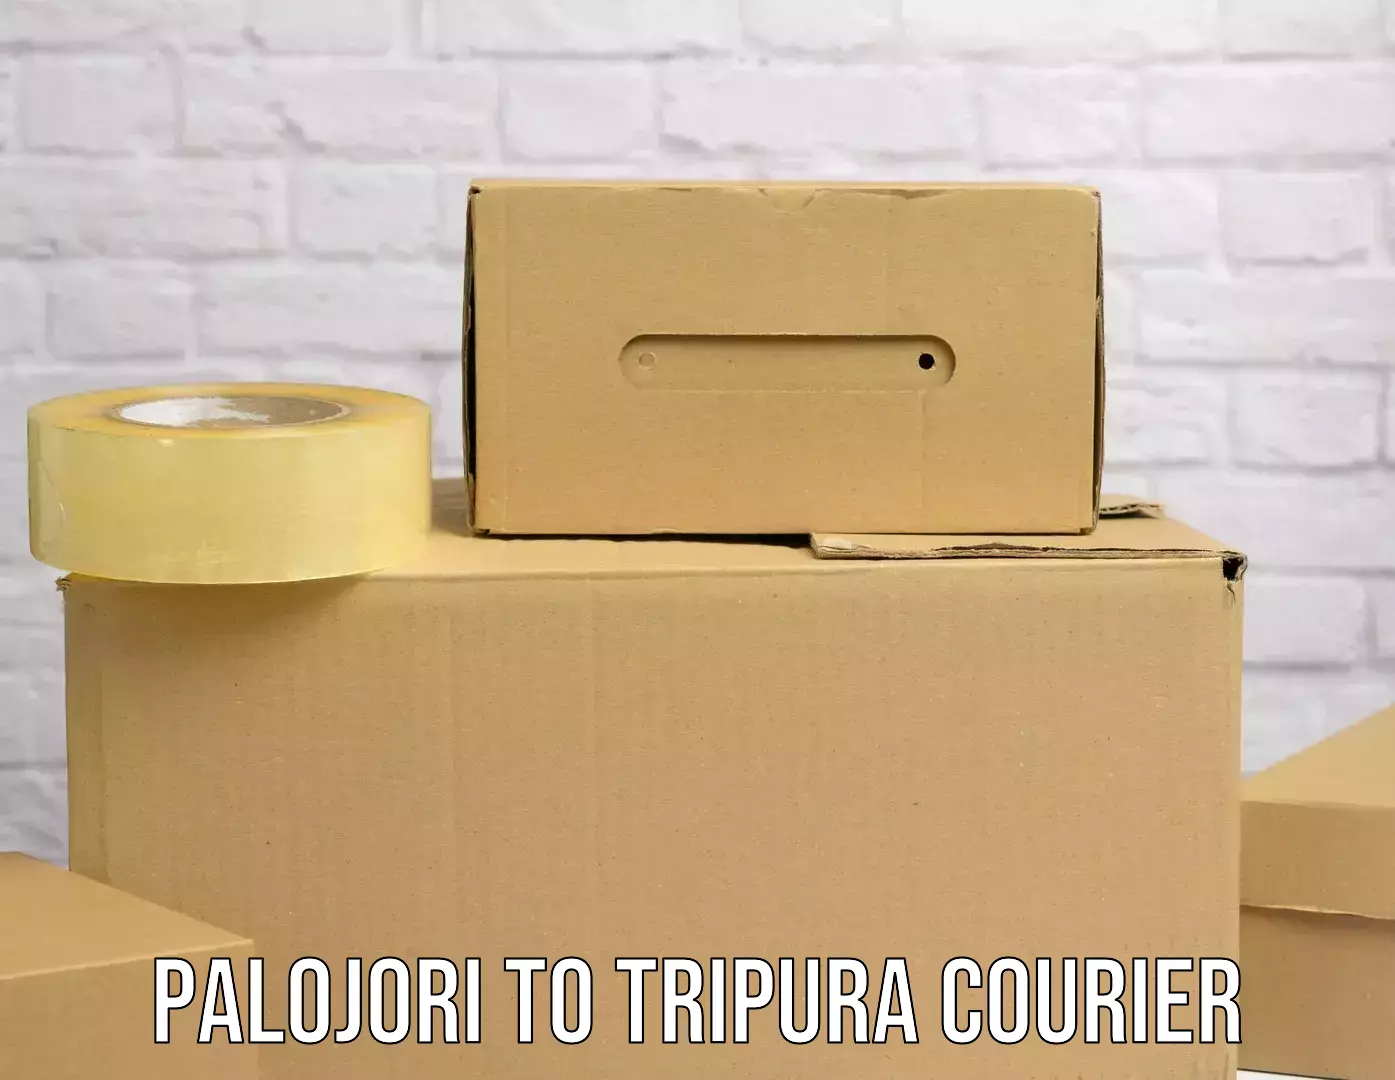 High-speed parcel service Palojori to North Tripura